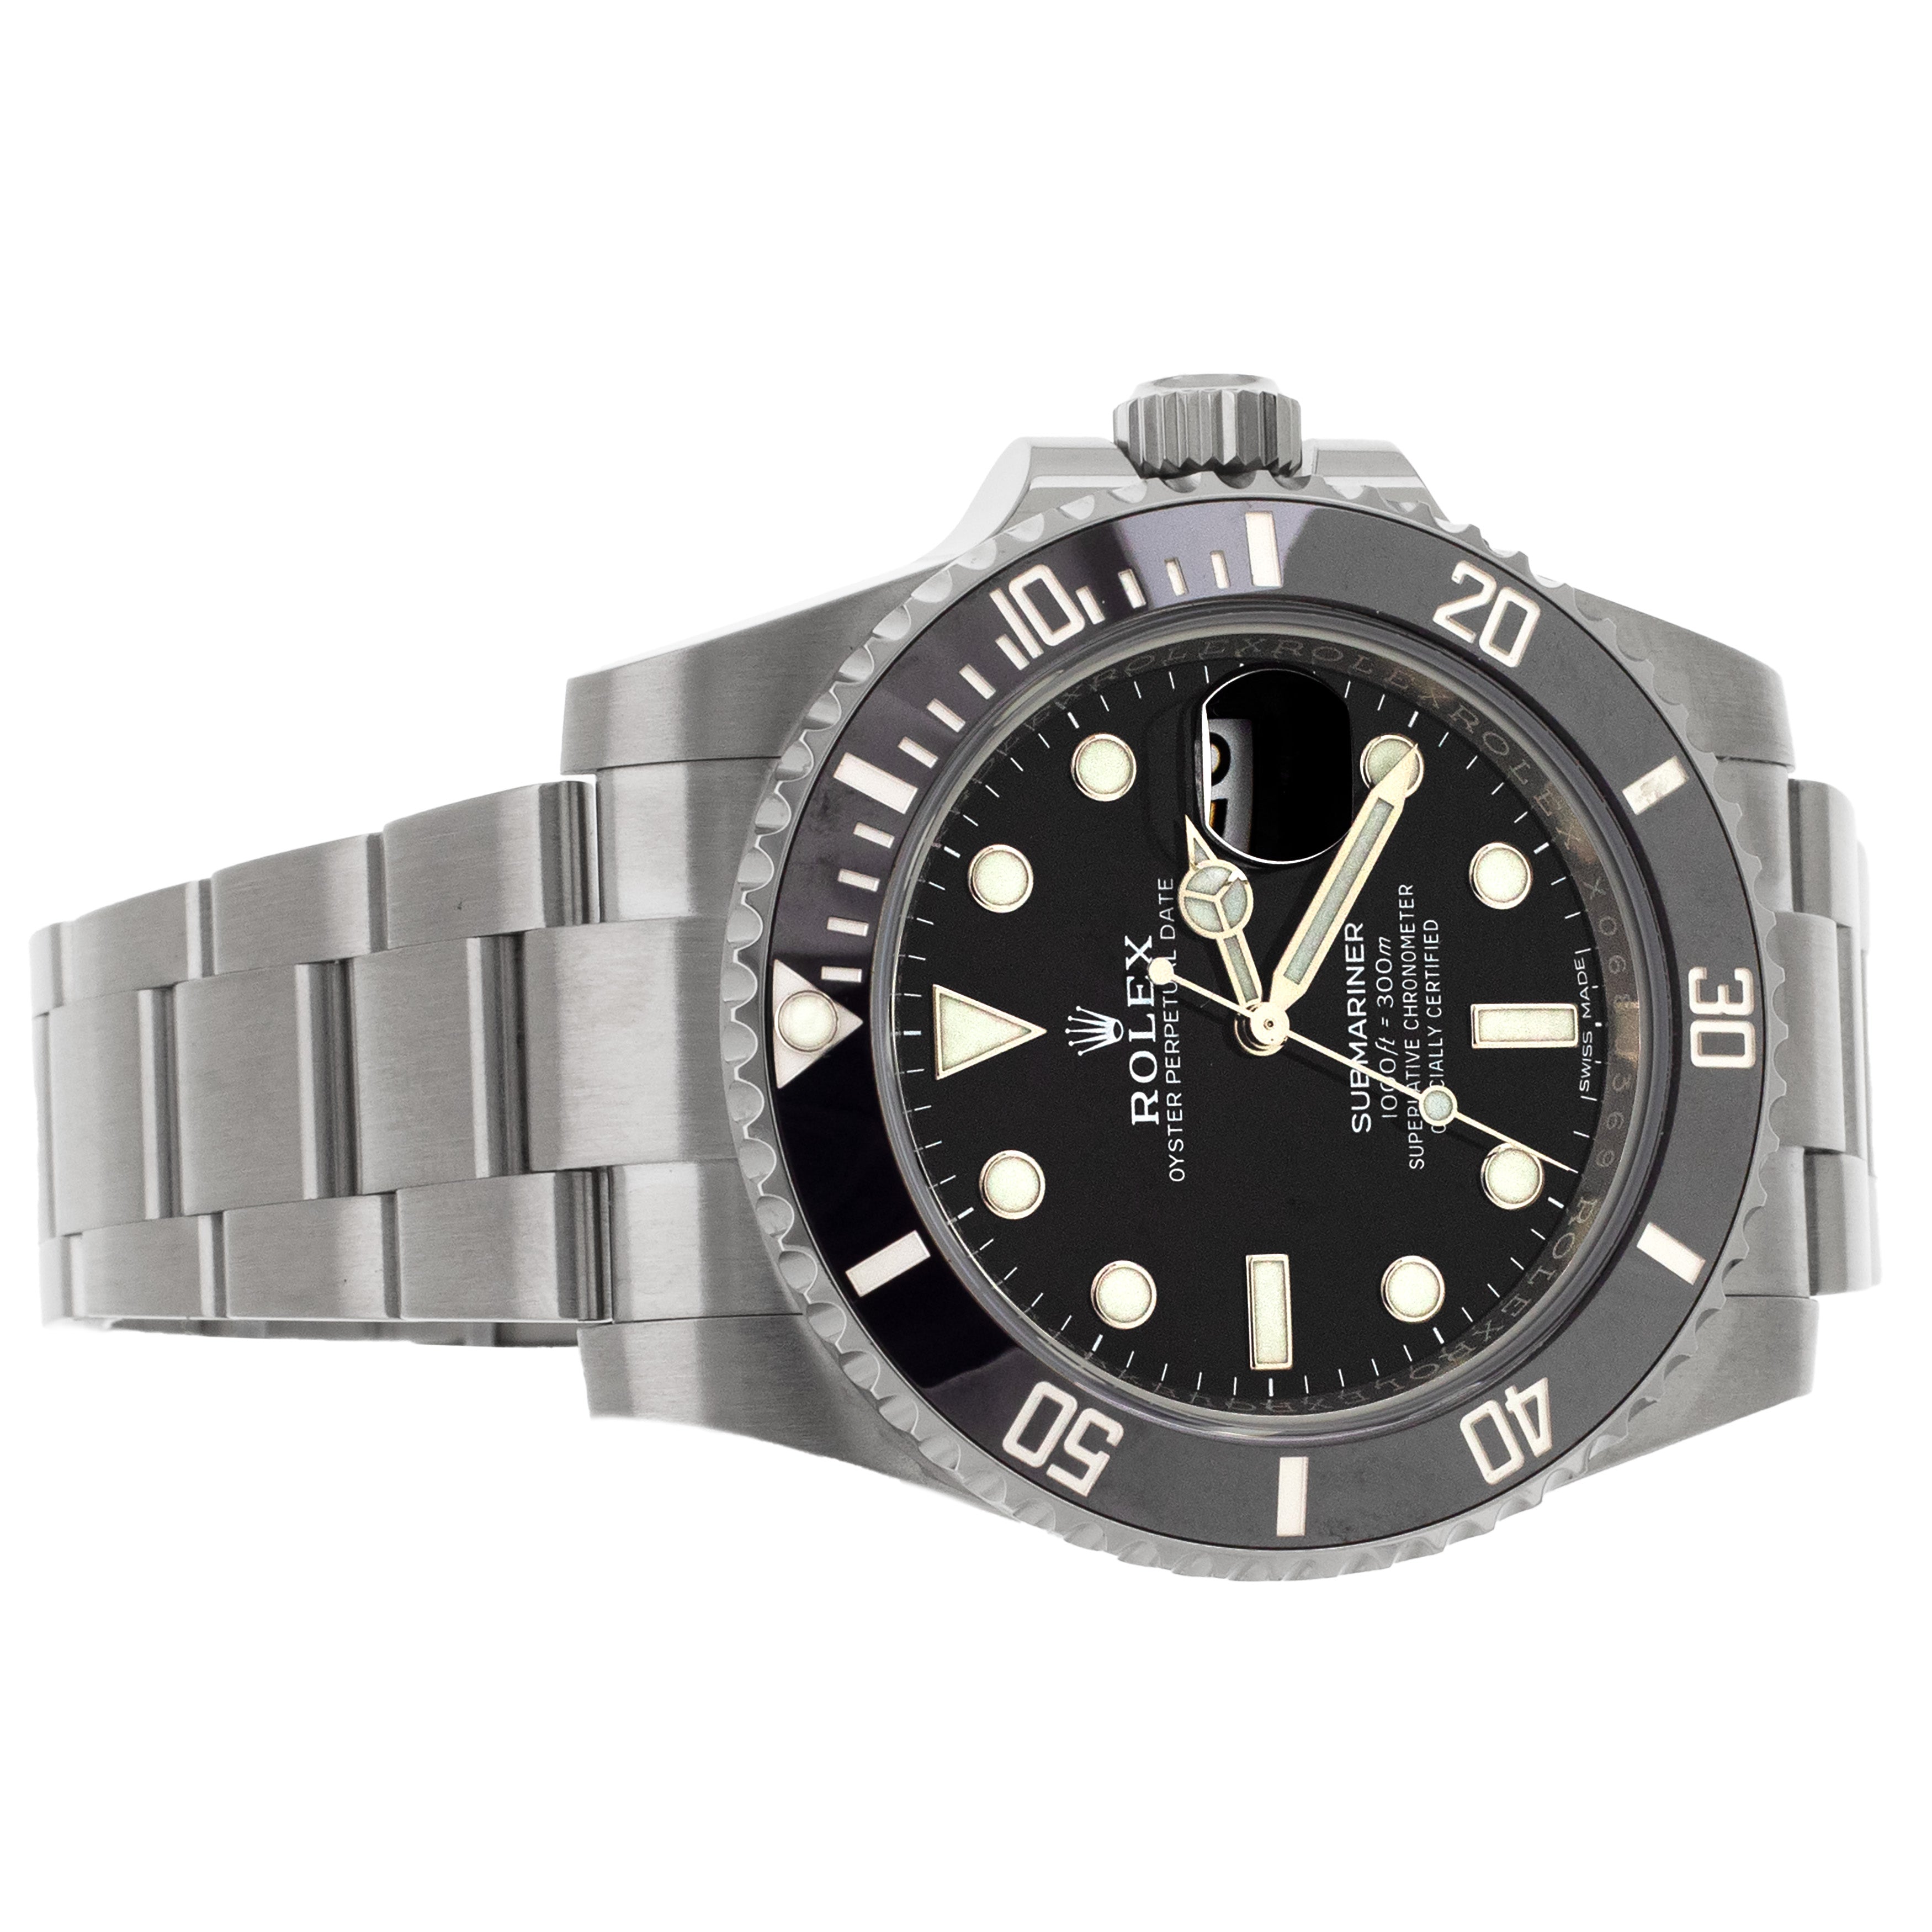 Rolex Submariner Date Stainless steel black dial 40mm 116610LN Full set